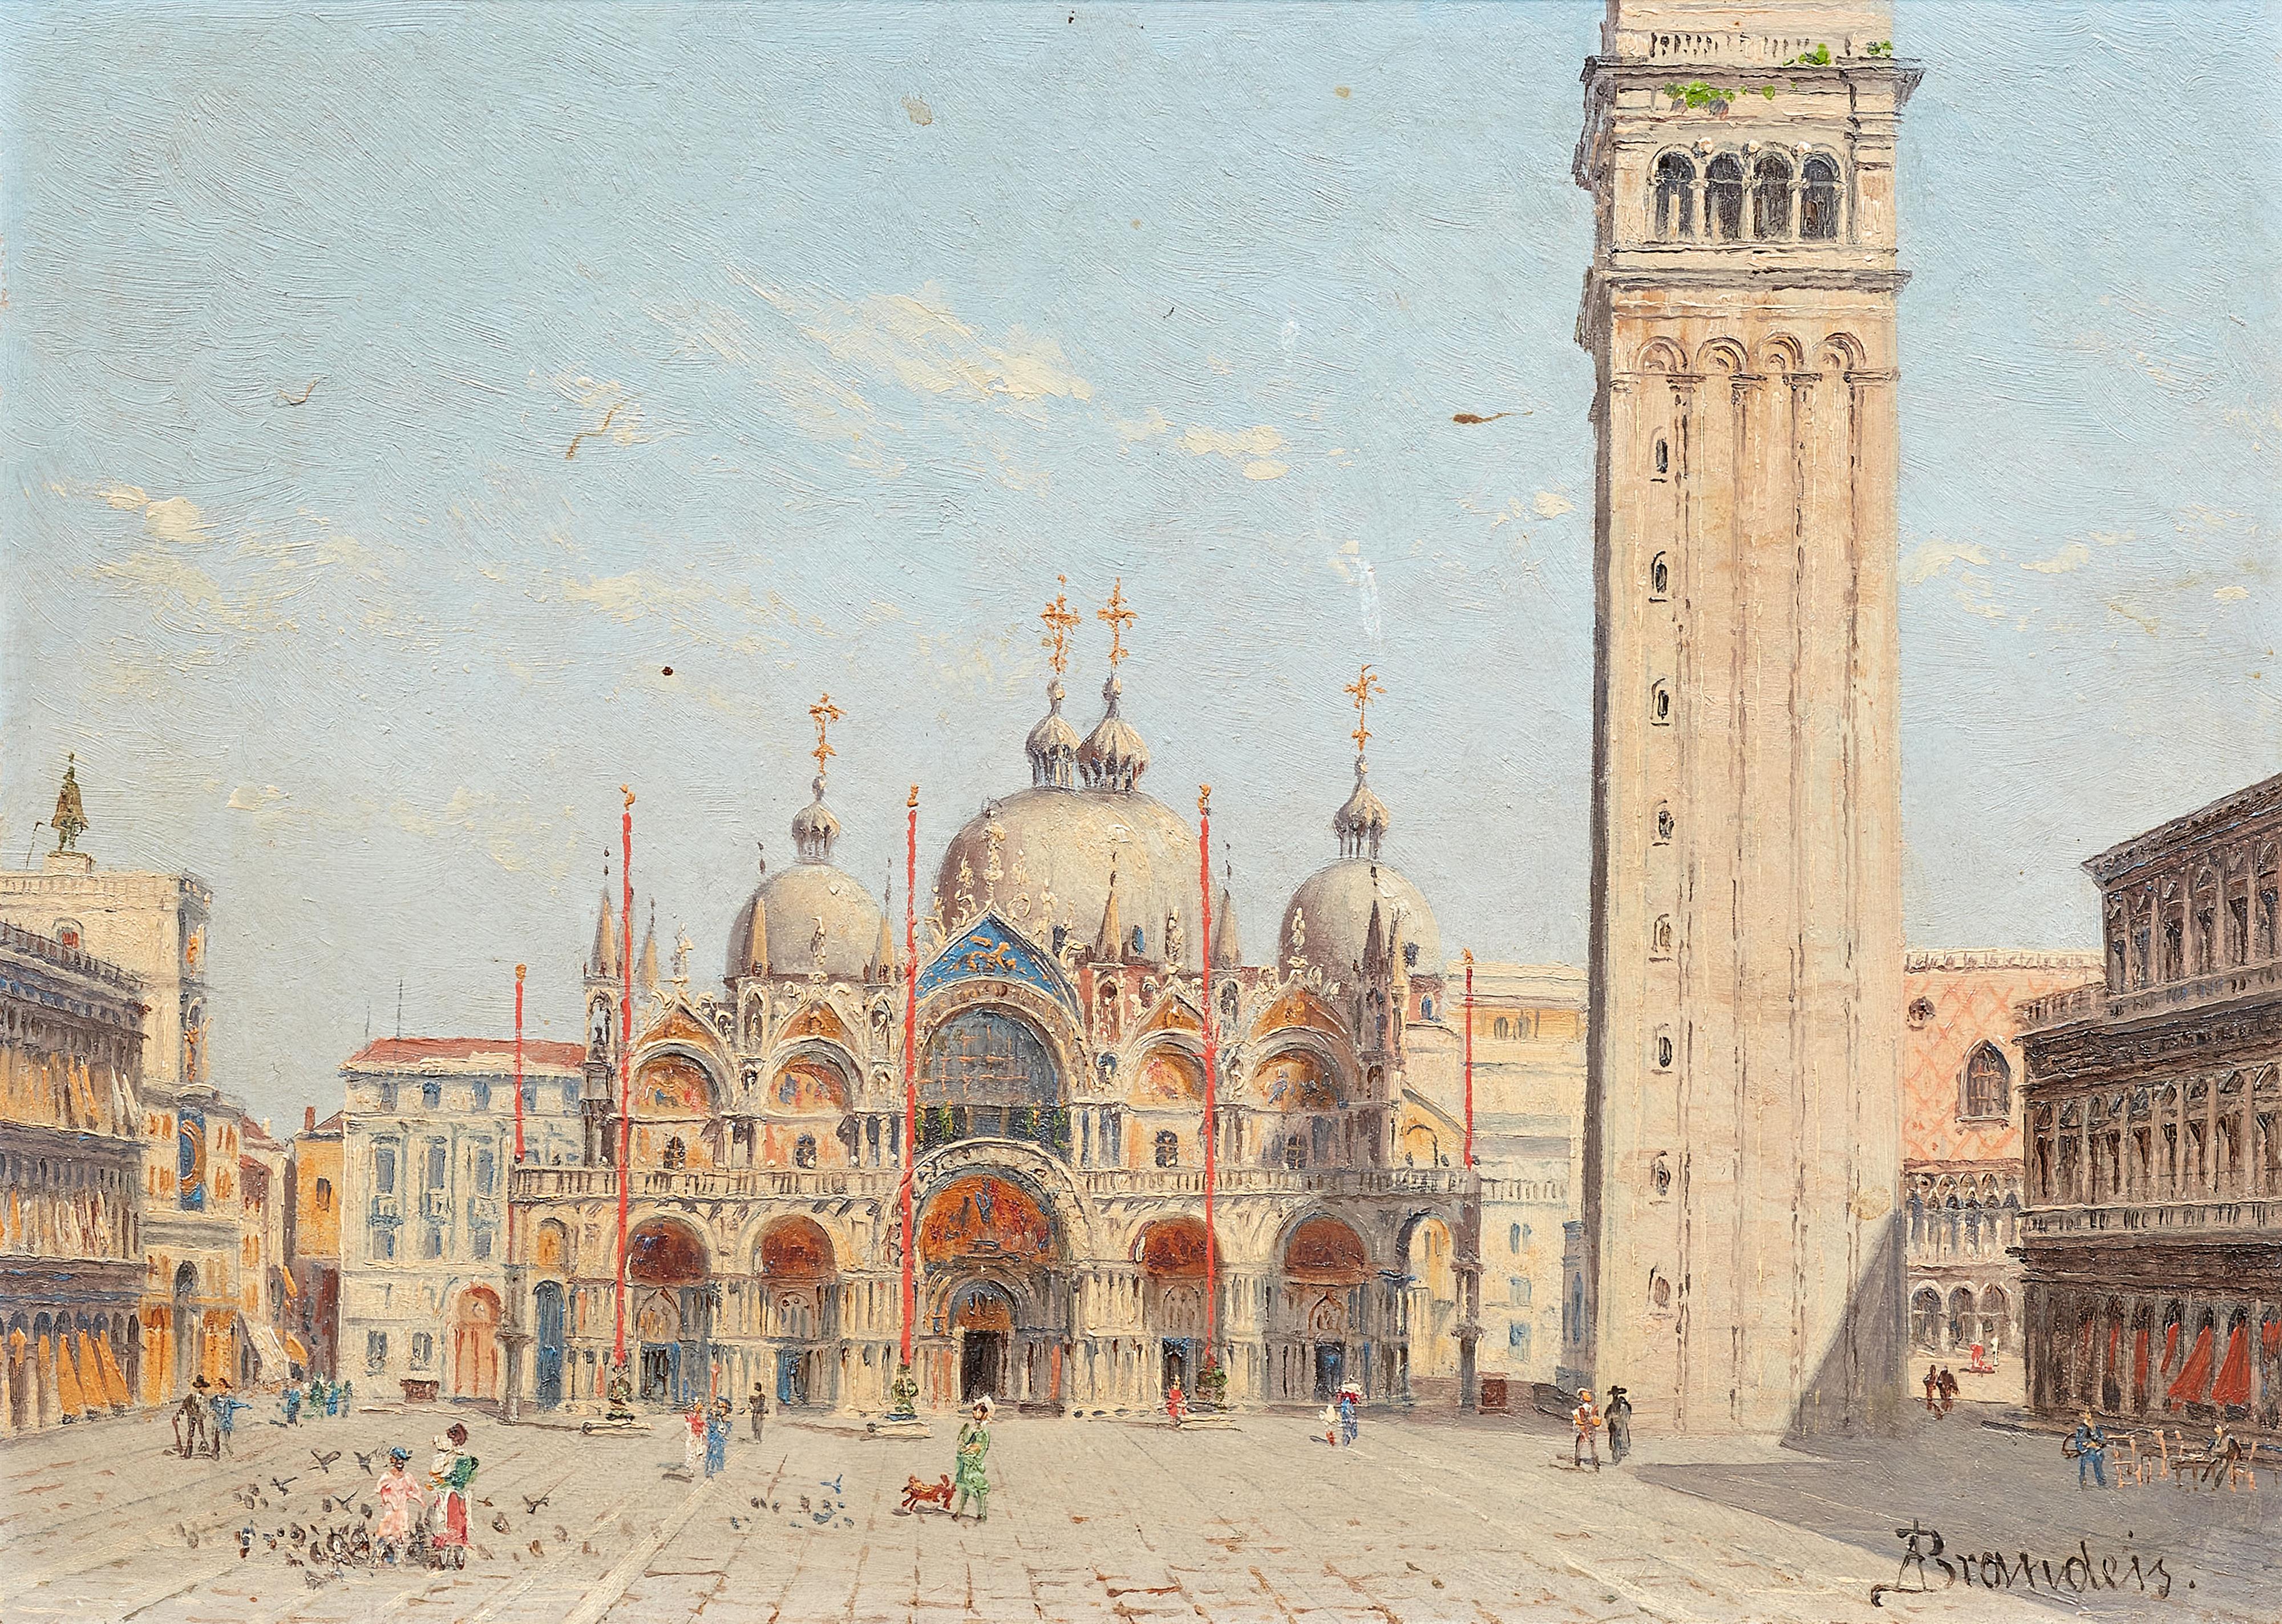 Antonietta Brandeis - Paar Venedigansichten:
Piazza San Marco mit Basilica di San Marco 
Riva degli Schiavoni mit Dogenpalast - image-1